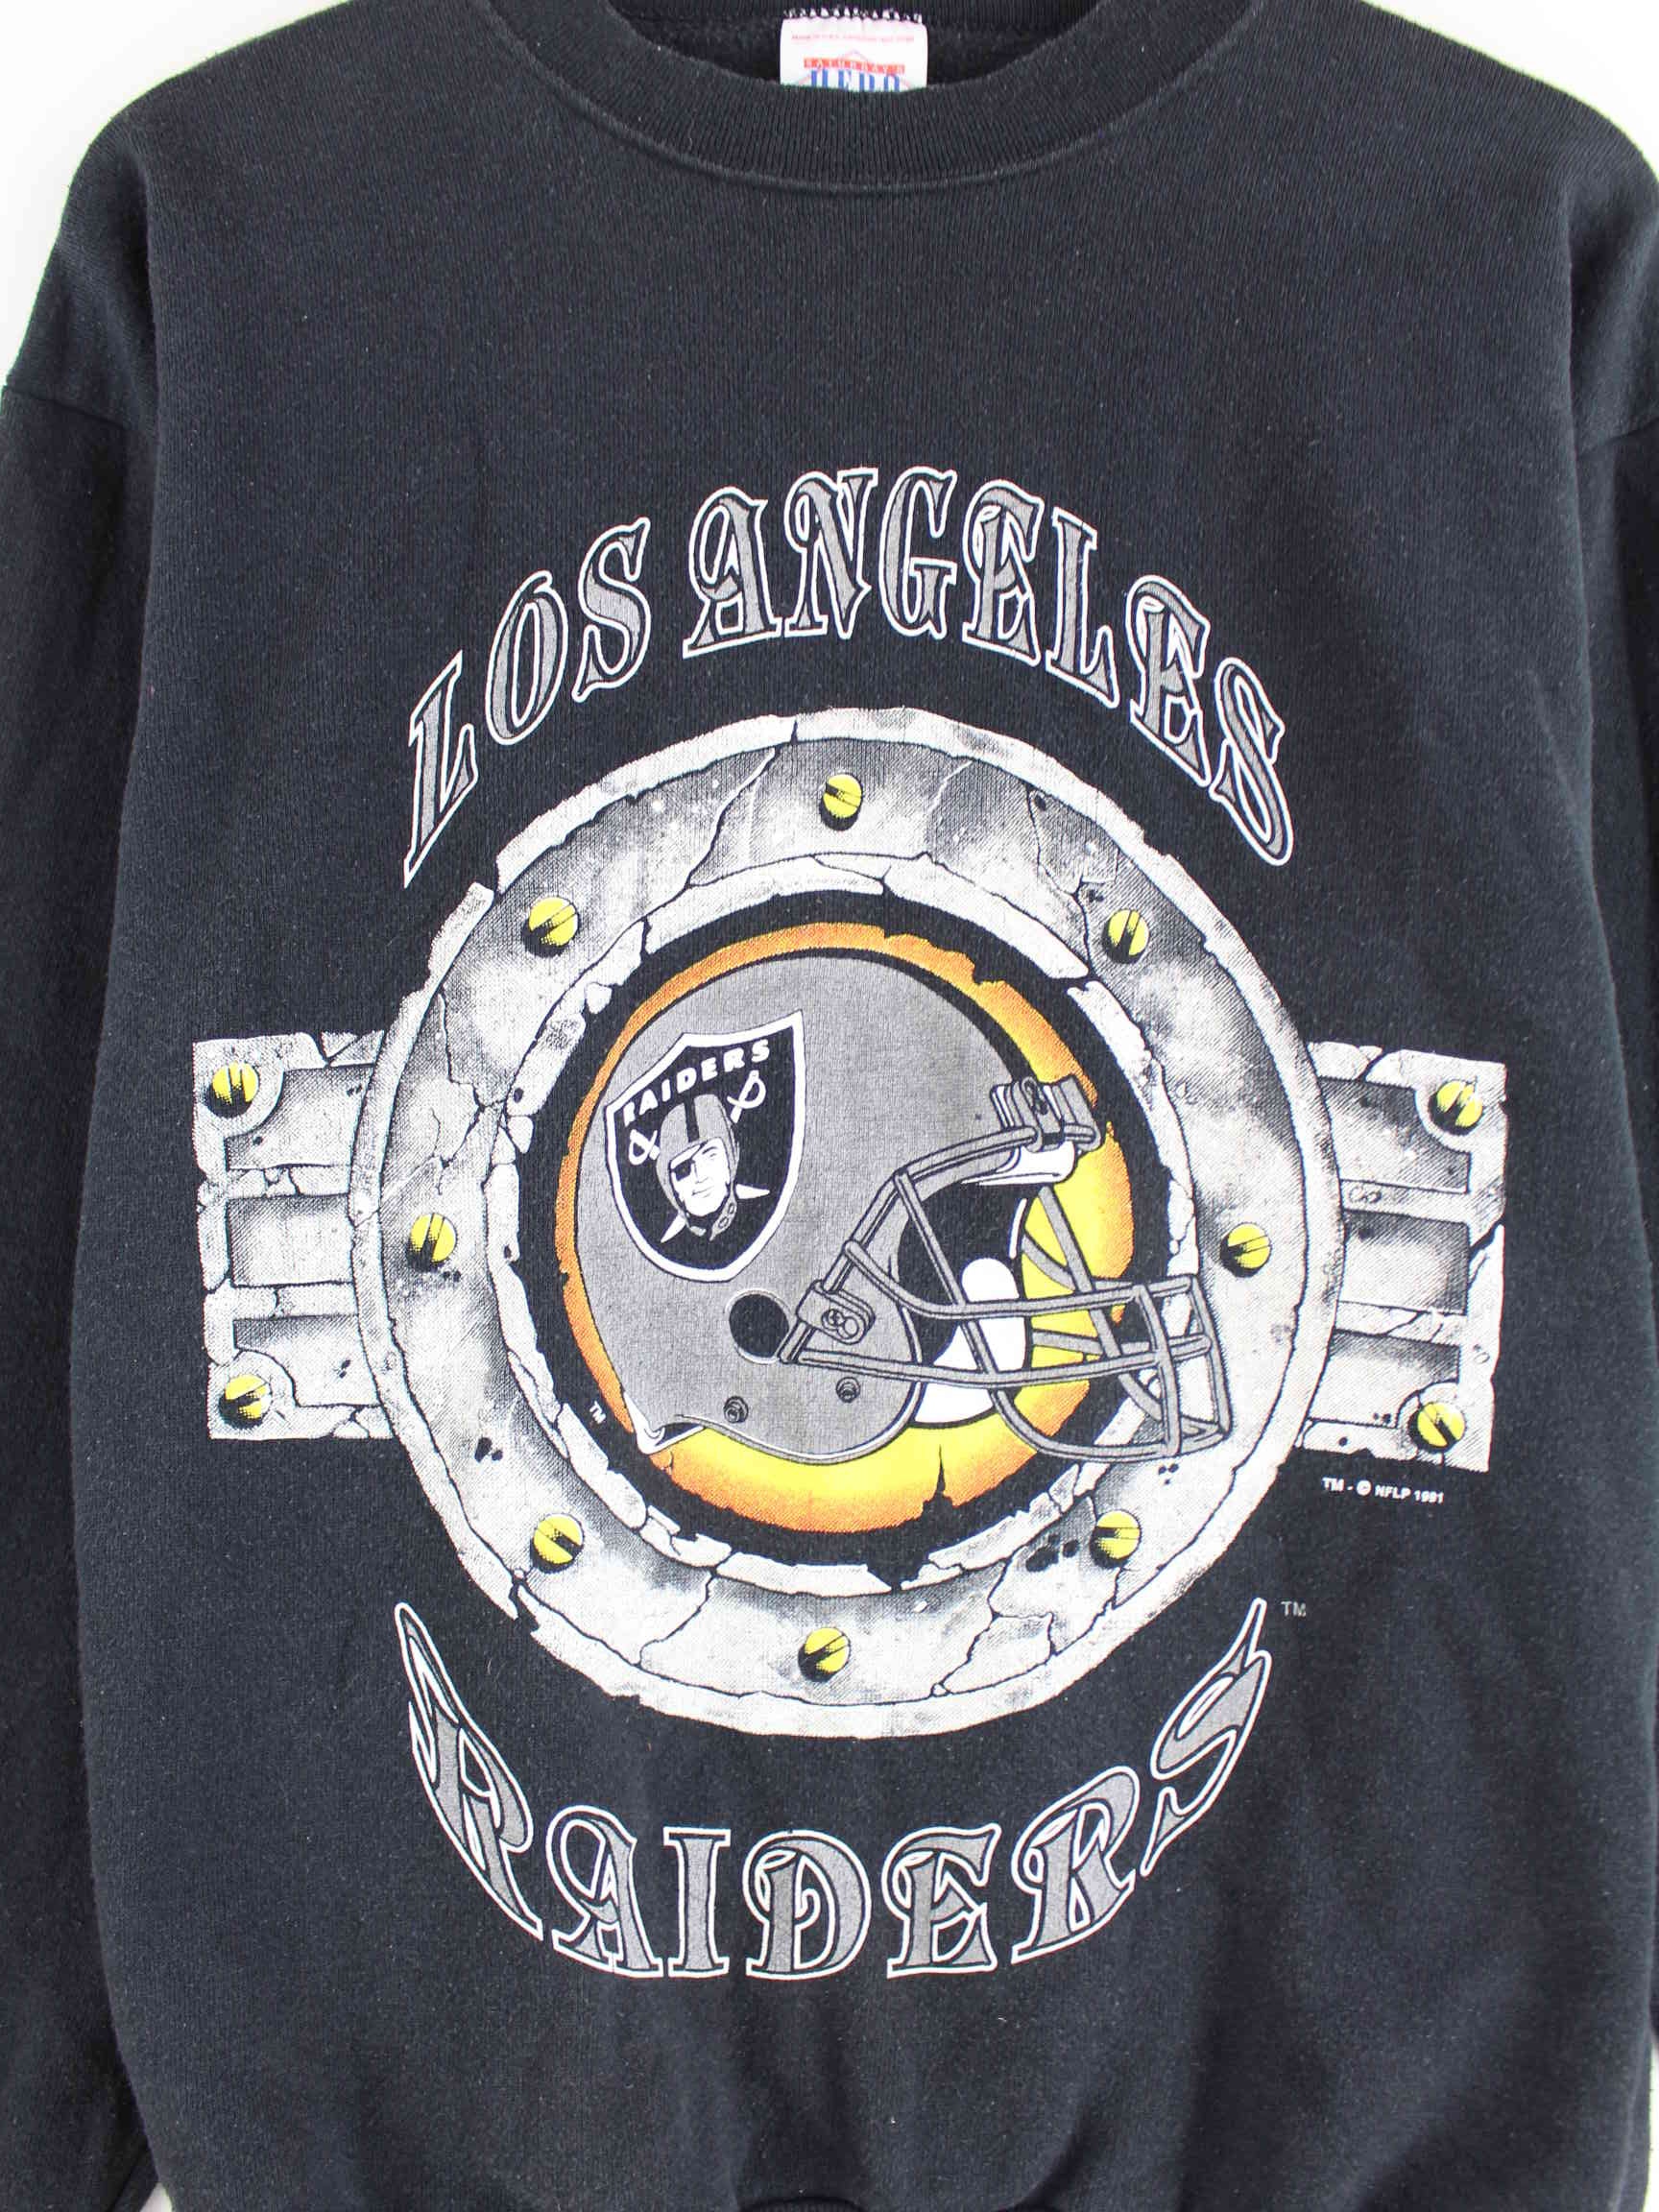 Vintage 1991 Los Angeles Raiders Sweater Schwarz M (detail image 1)